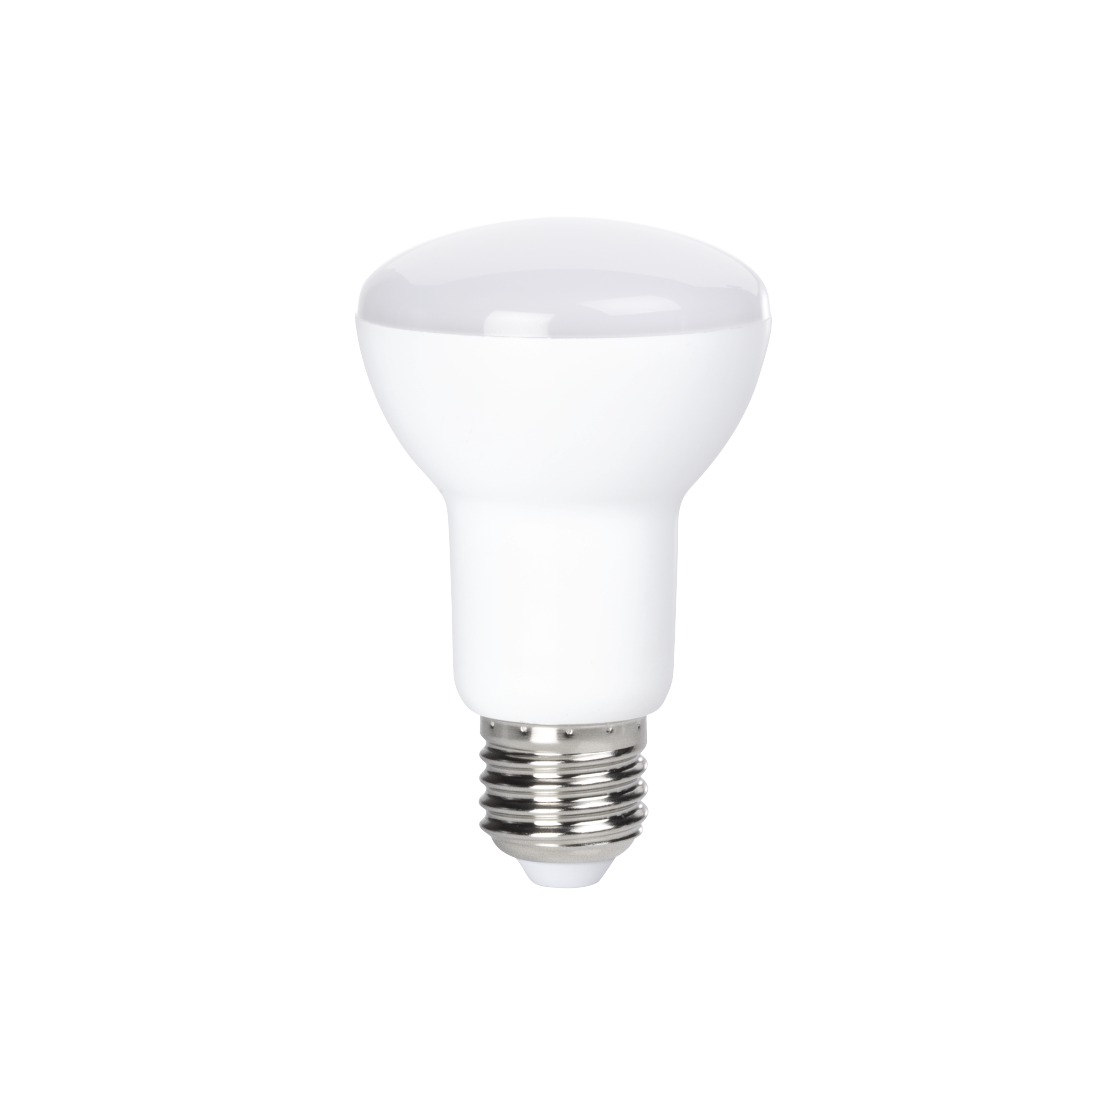 abx Druckfähige Abbildung - Xavax, LED-Lampe, E27, 530lm ersetzt 45W, Reflektorlampe R63, Warmweiß